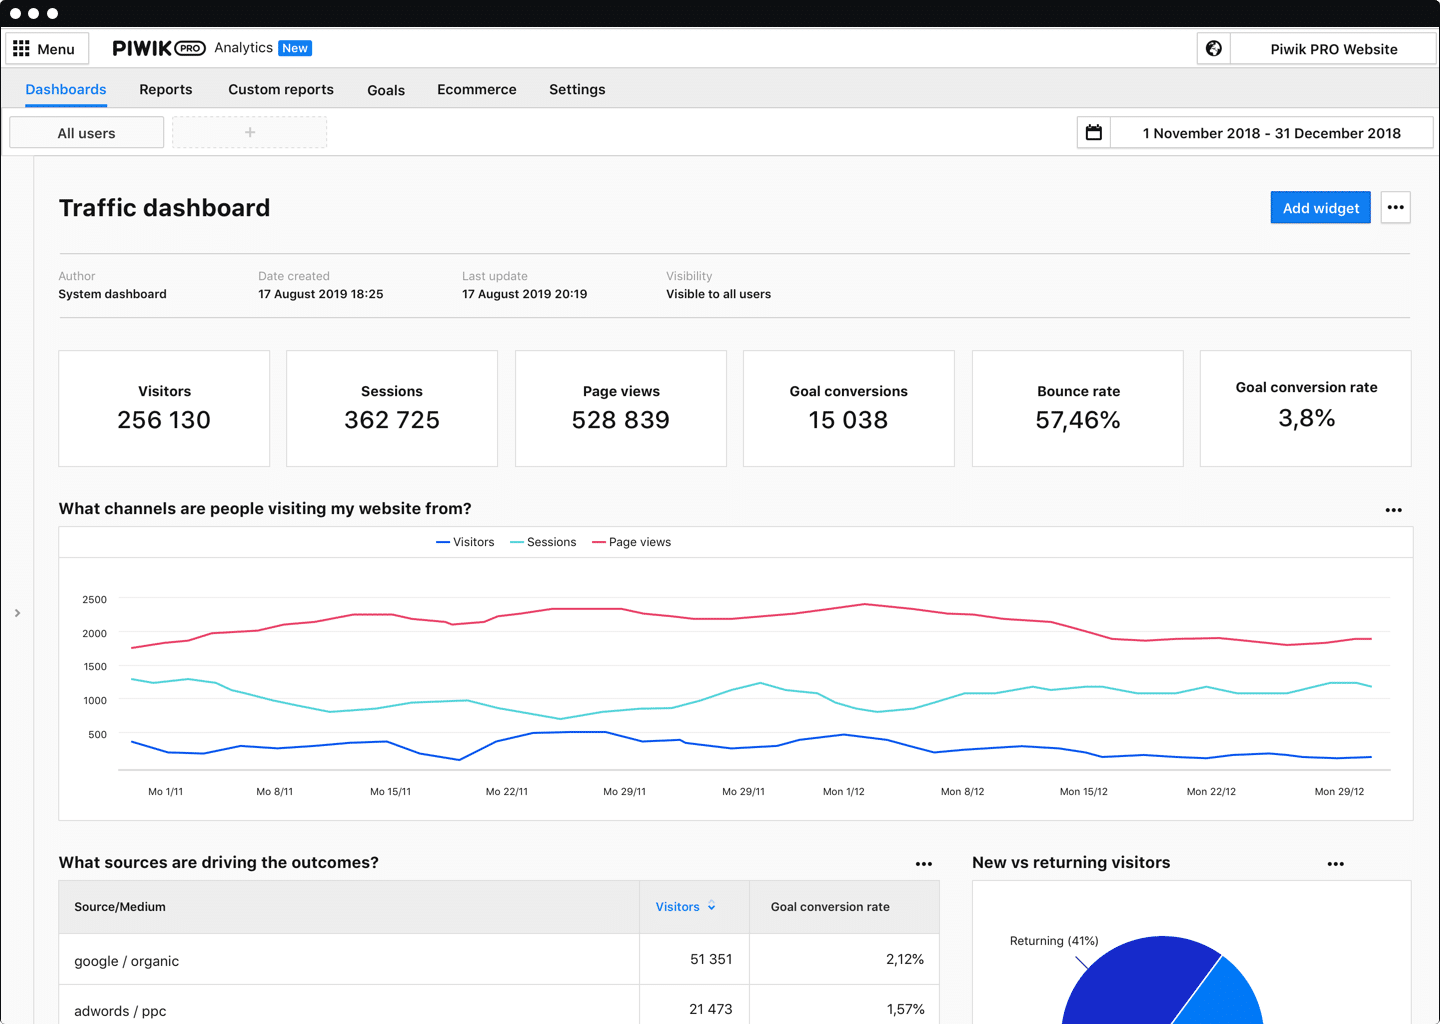 Piwik PRO - Dashboard Analytics